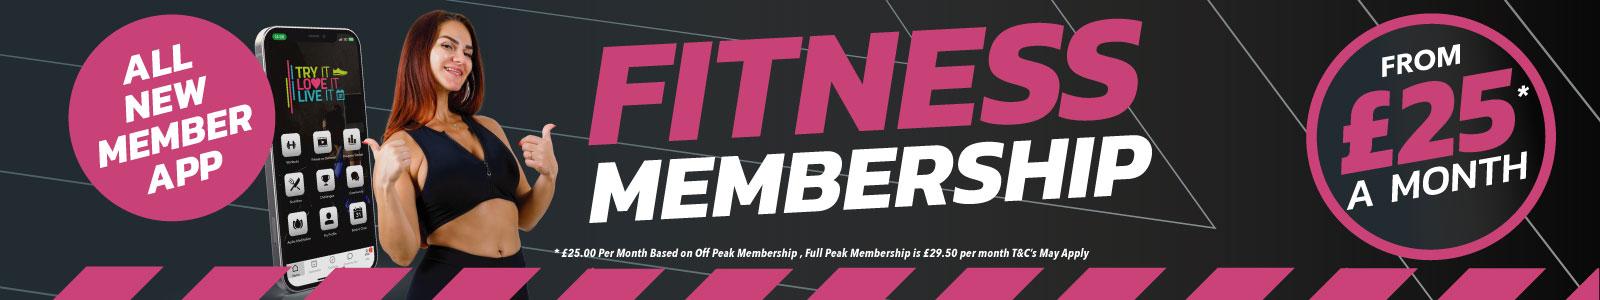 Fitness memberships